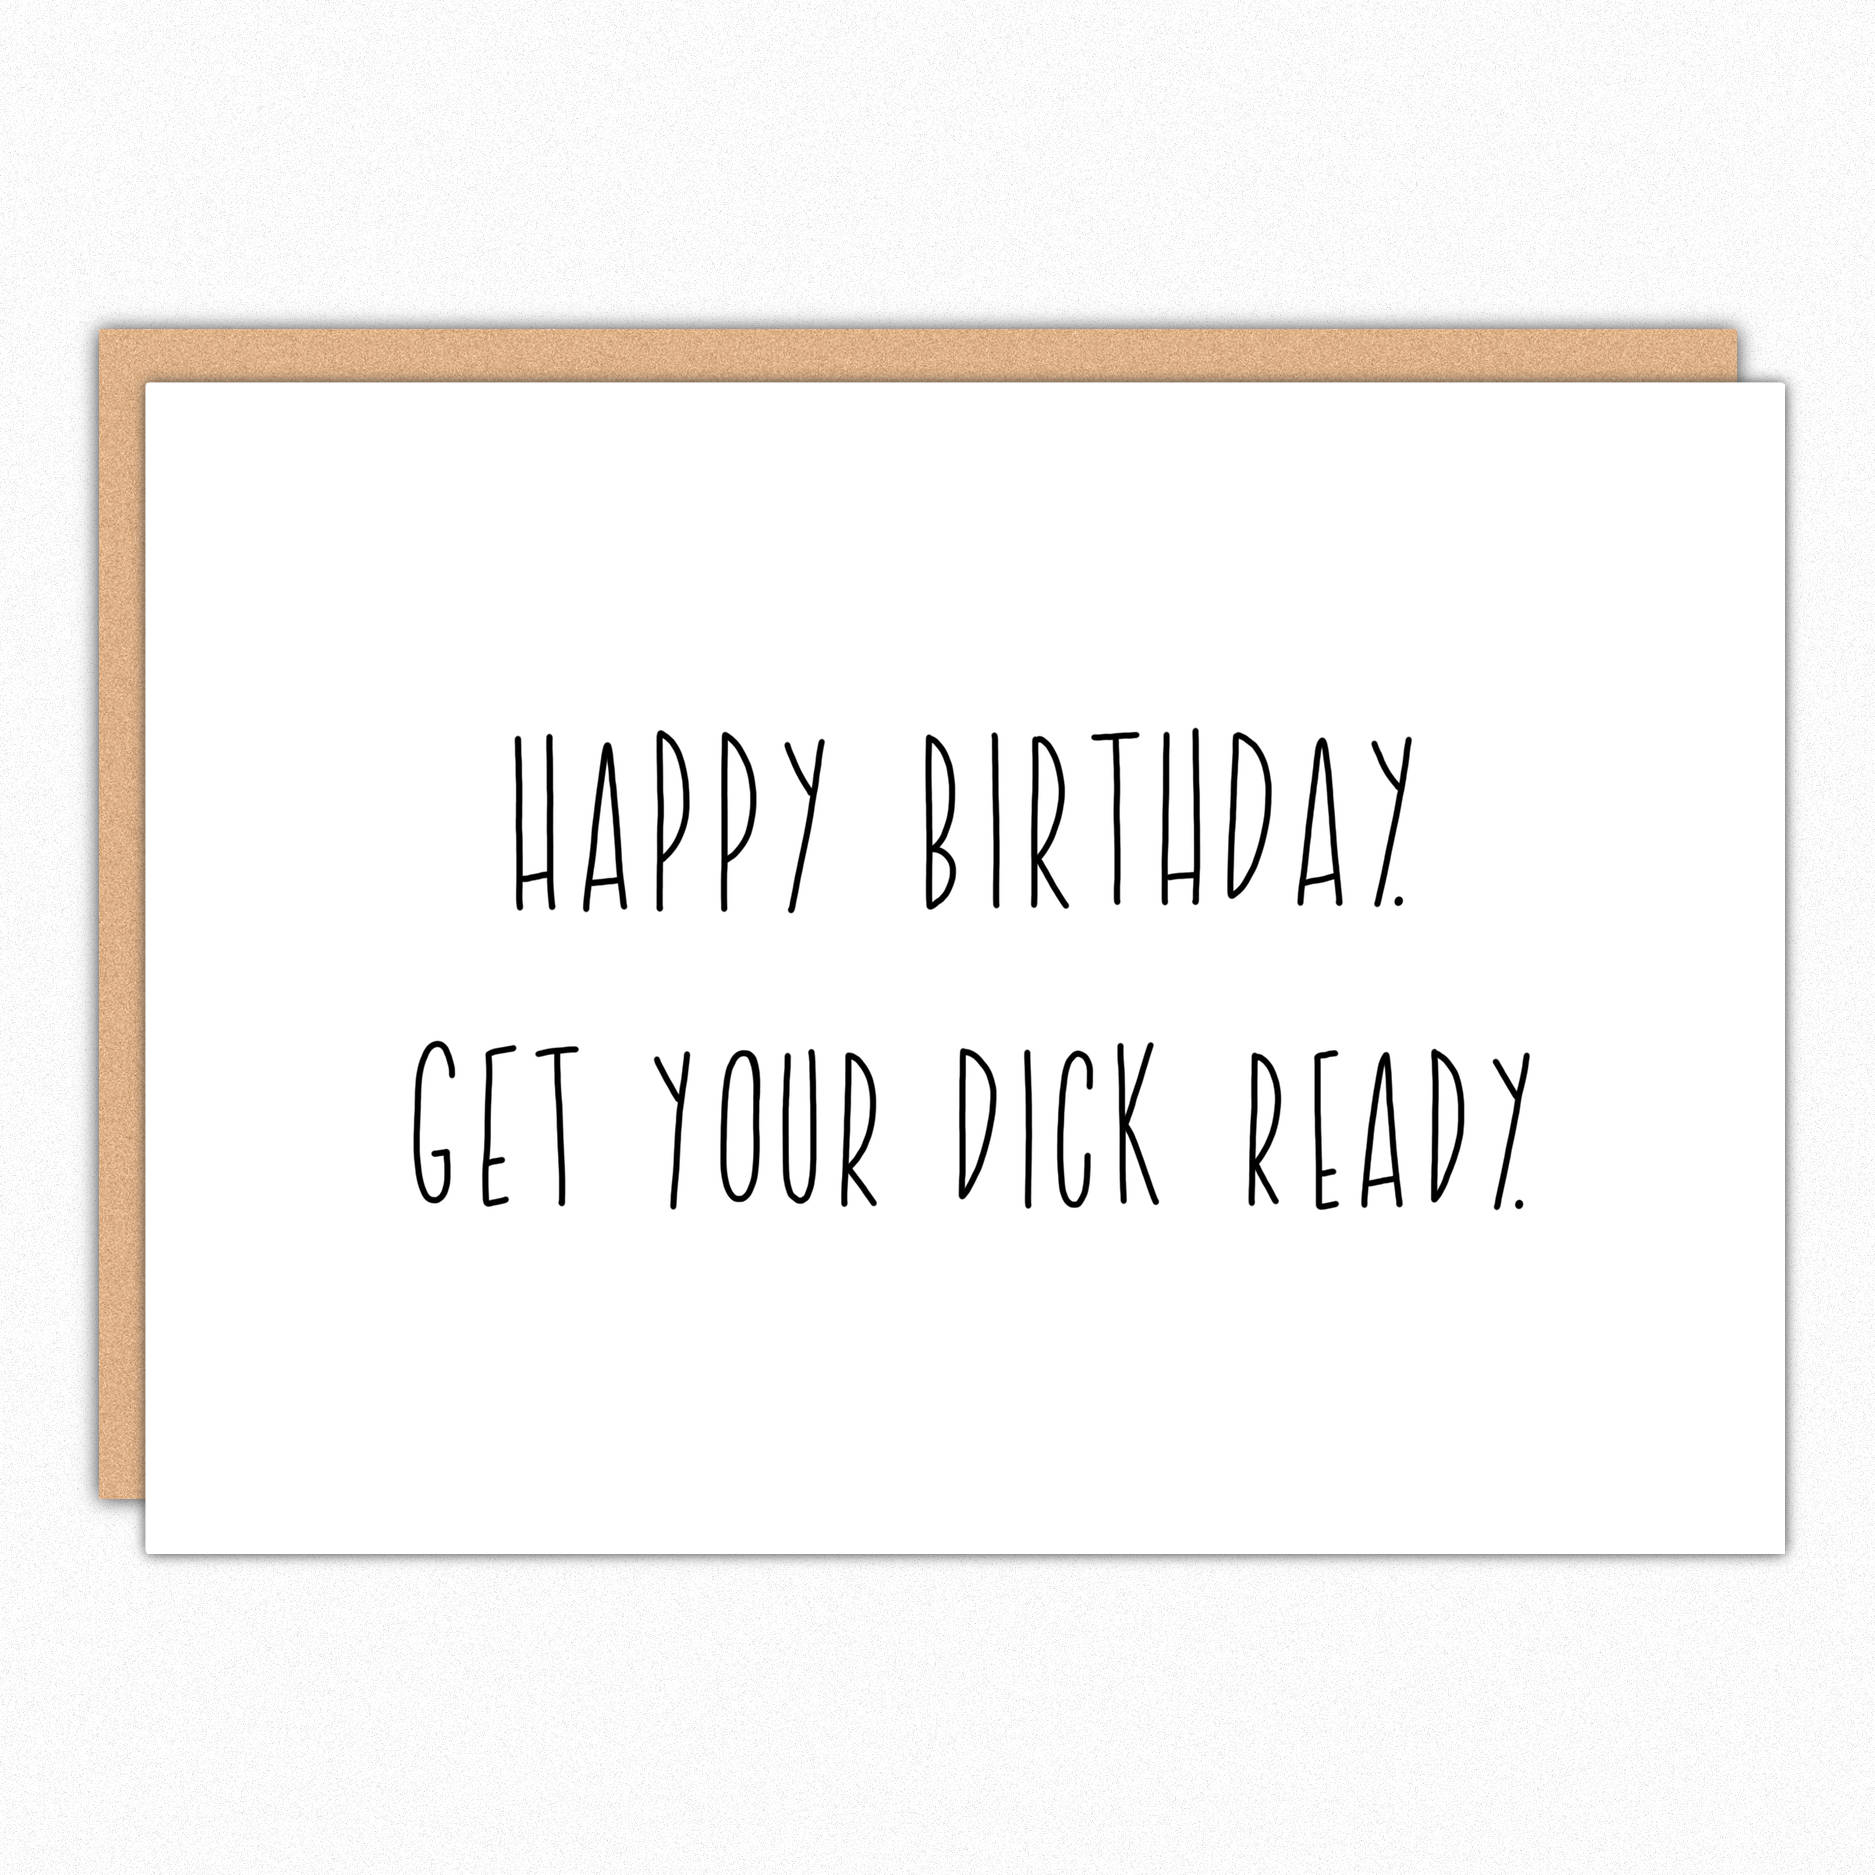 Unique Birthday Card Ideas For Boyfriend Birthday Card Boyfriend Birthday Gifts For Boyfriend Naughty Birthday Card For Him For Husband Dirty Birthday Get Your Dick Ready 008